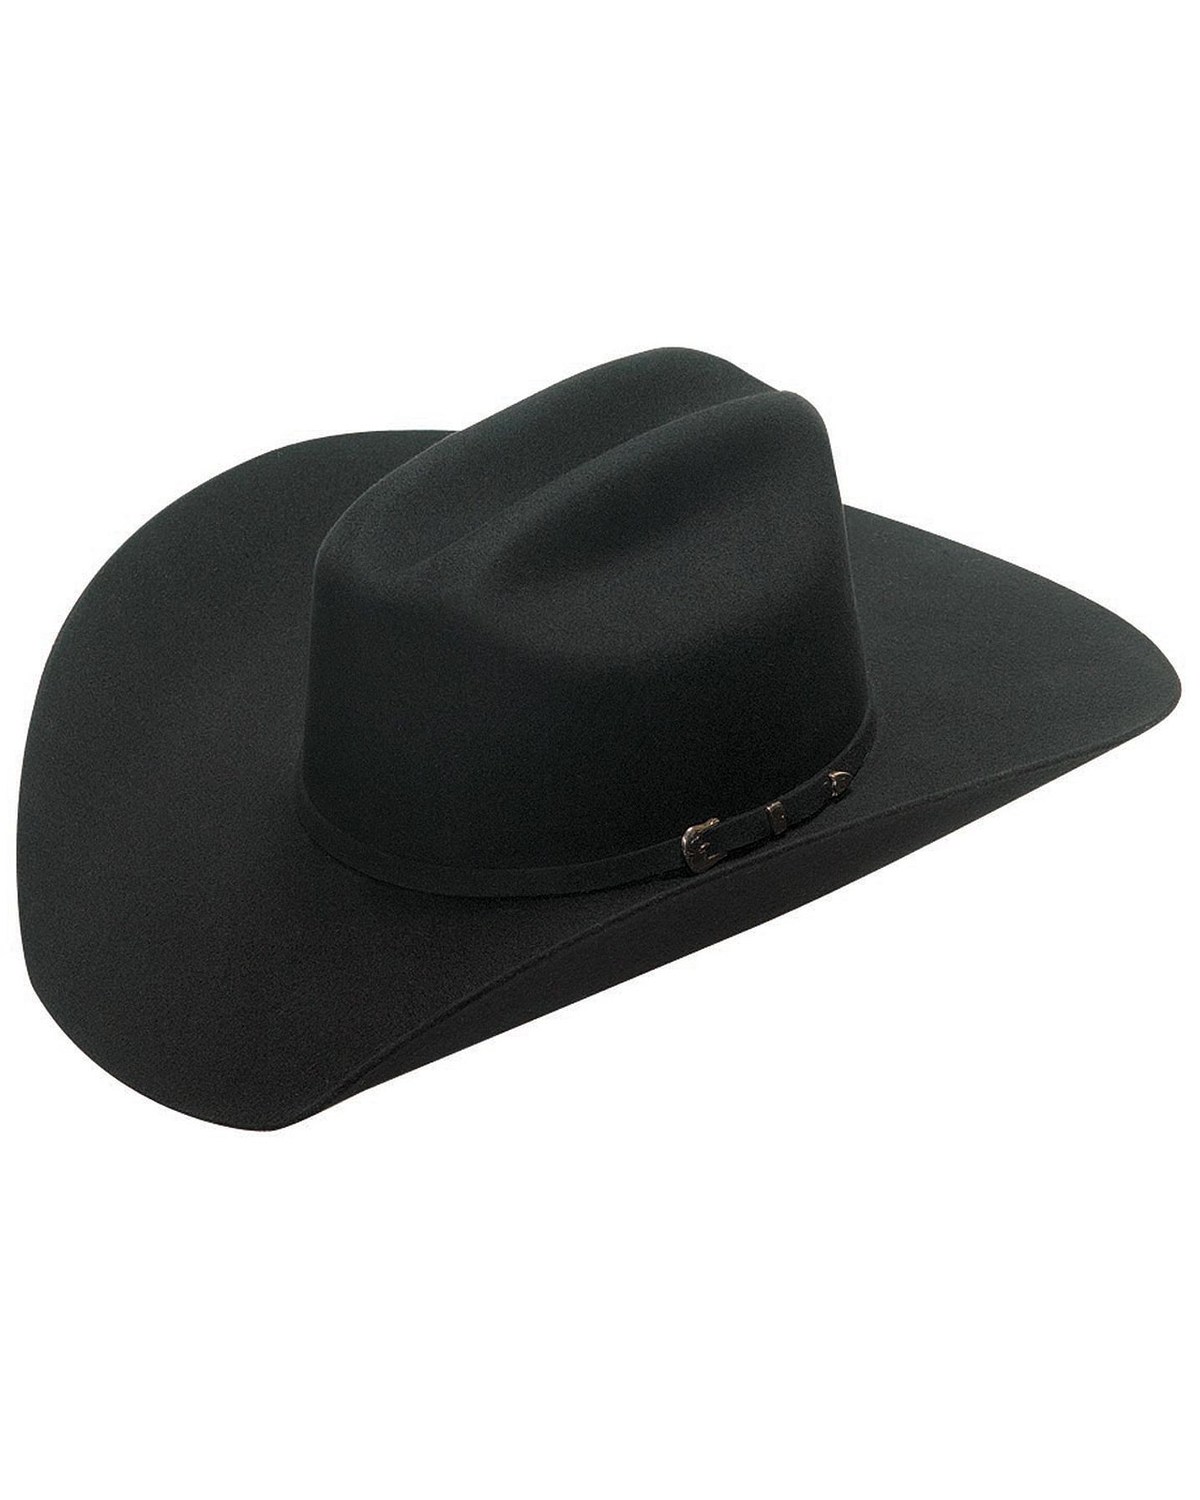 Twister Santa Fe 2X Felt Cowboy Hat